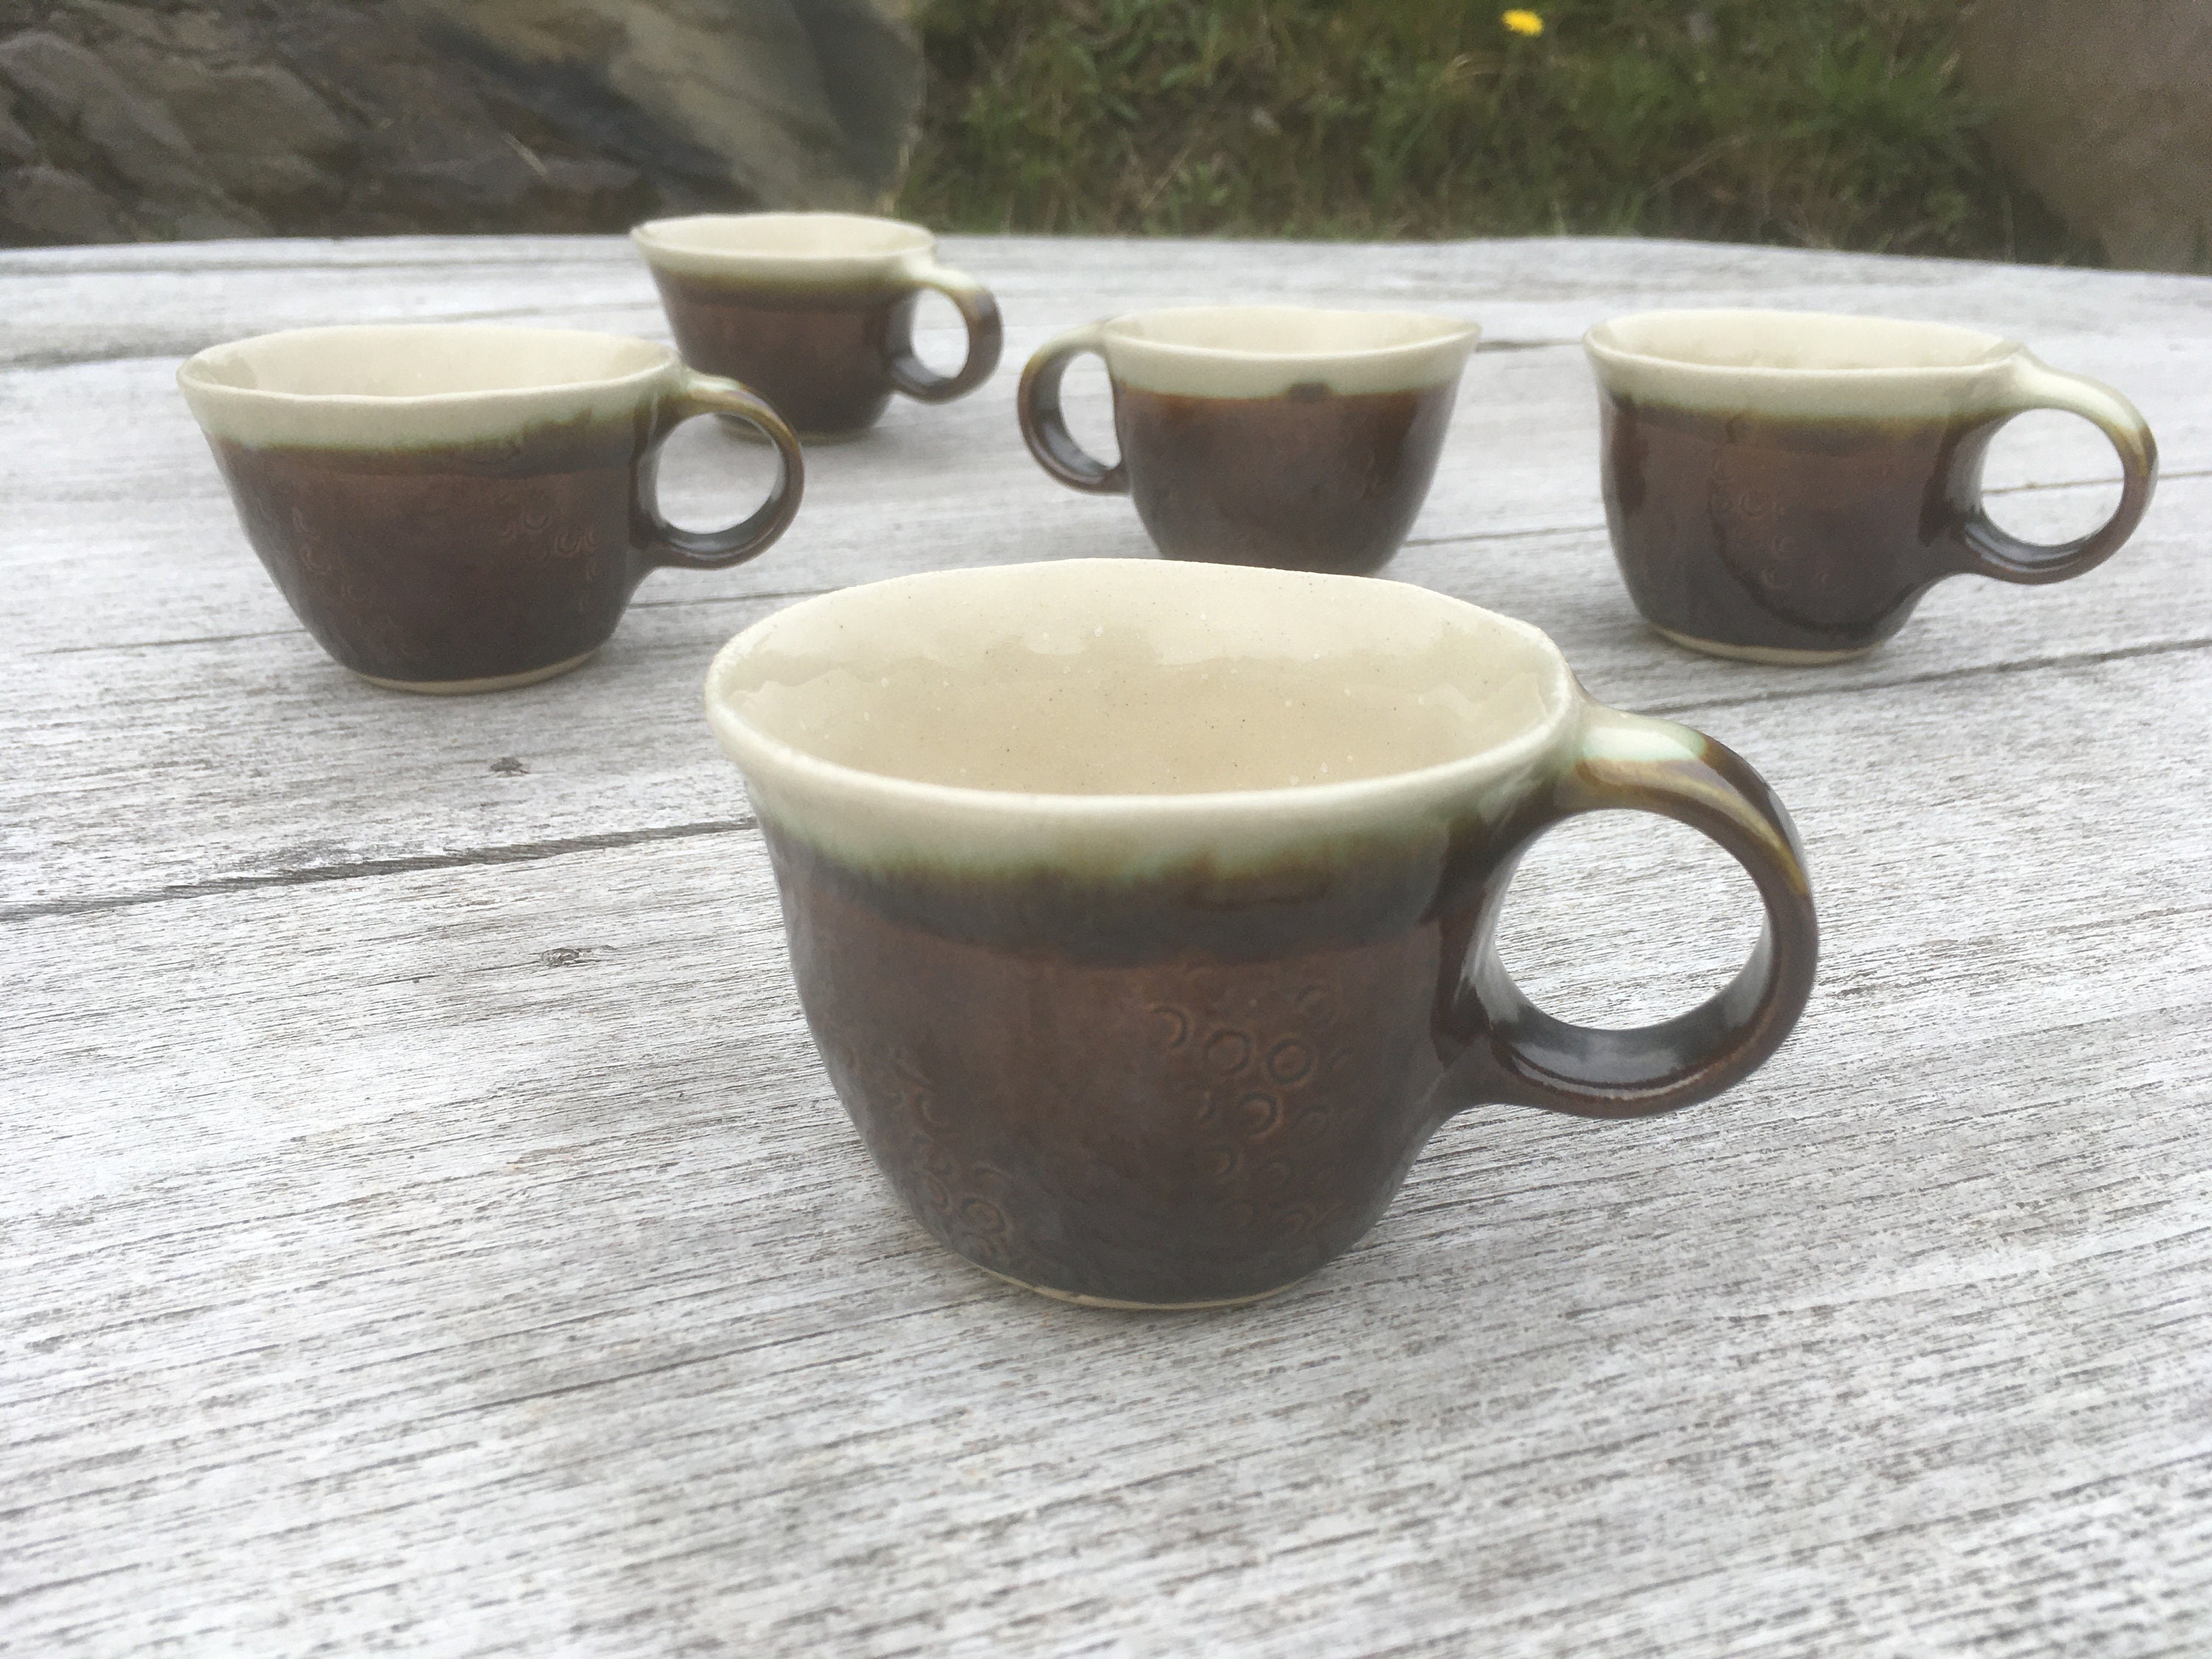 KIVY 3 oz espresso cups set of 4 - Italian style espresso cups and saucers  - Stoneware espresso